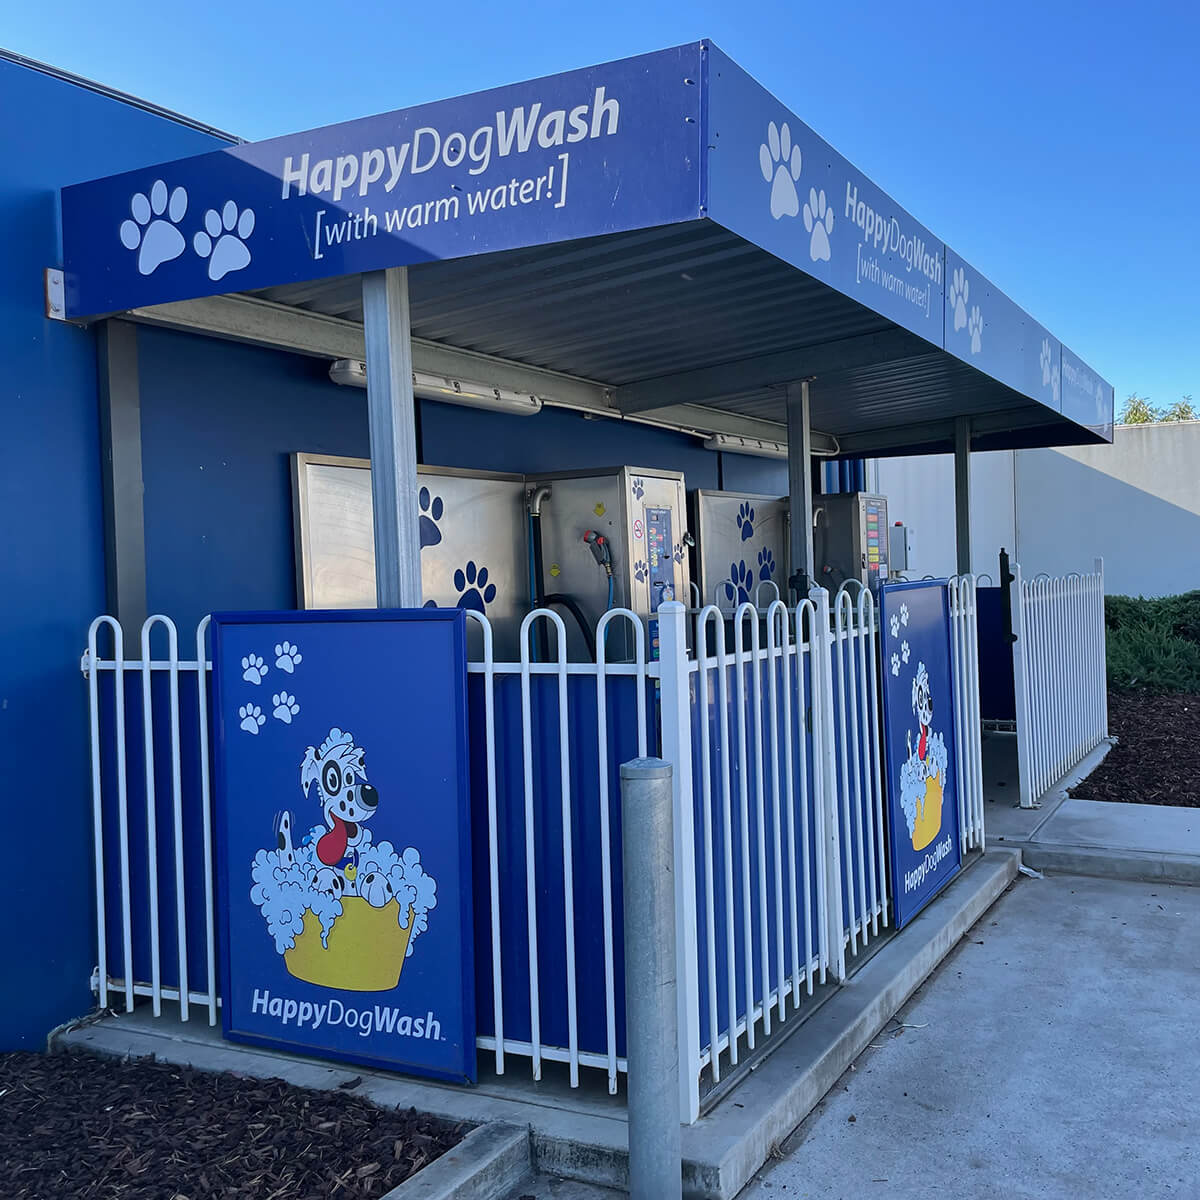 HappyDogWash - a convenient and fast alternative way to wash your best friend